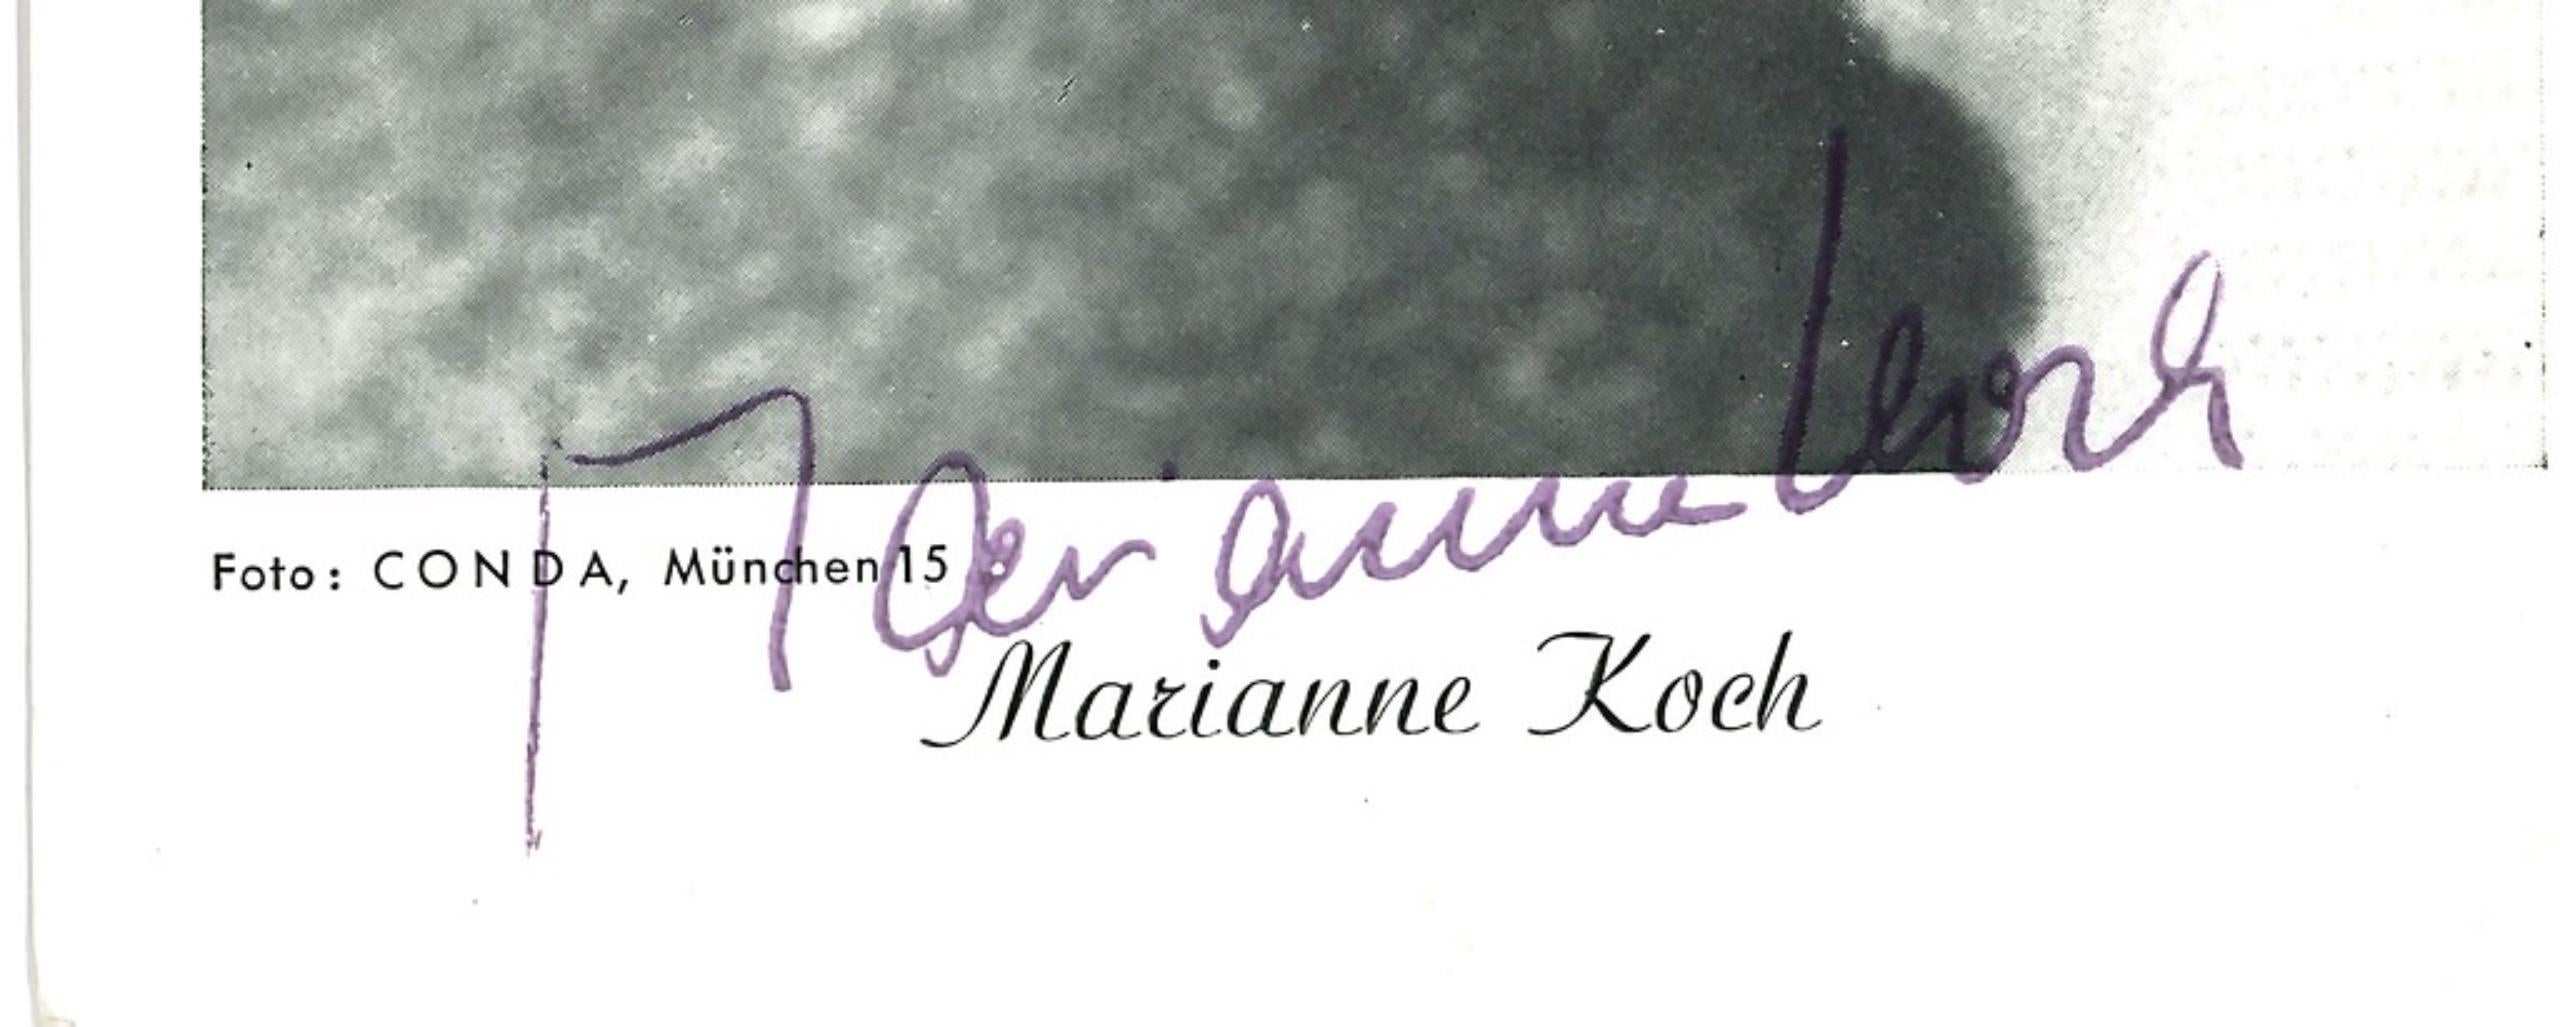 Autographed Portrait of Marianne Koch Memorabilia - 1960s - Photograph by Unknown